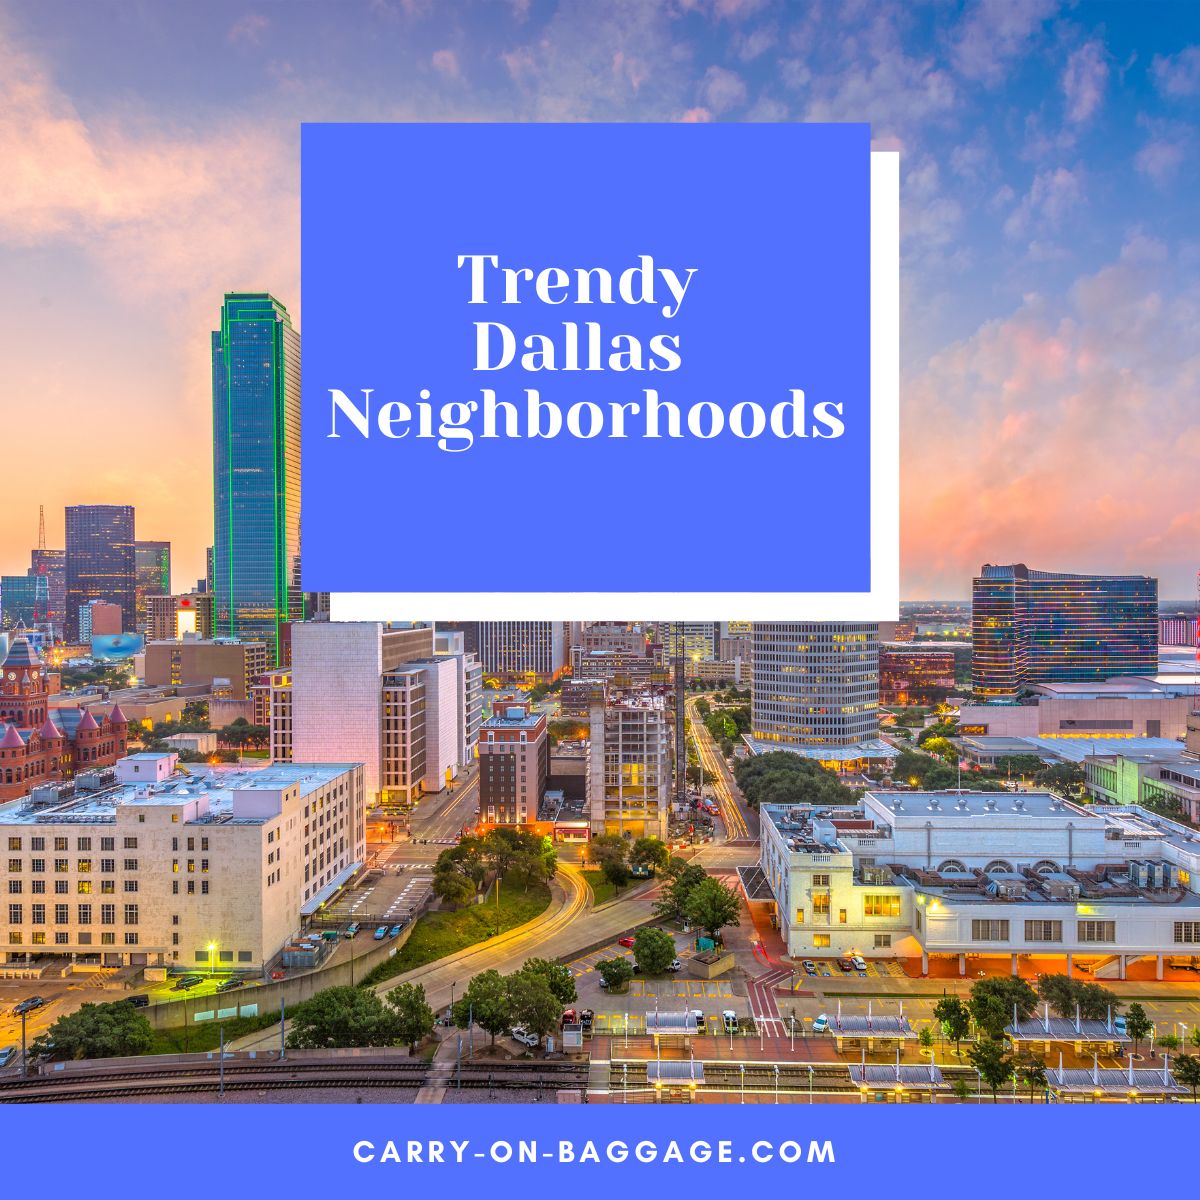 Trendy Dallas Neighborhoods